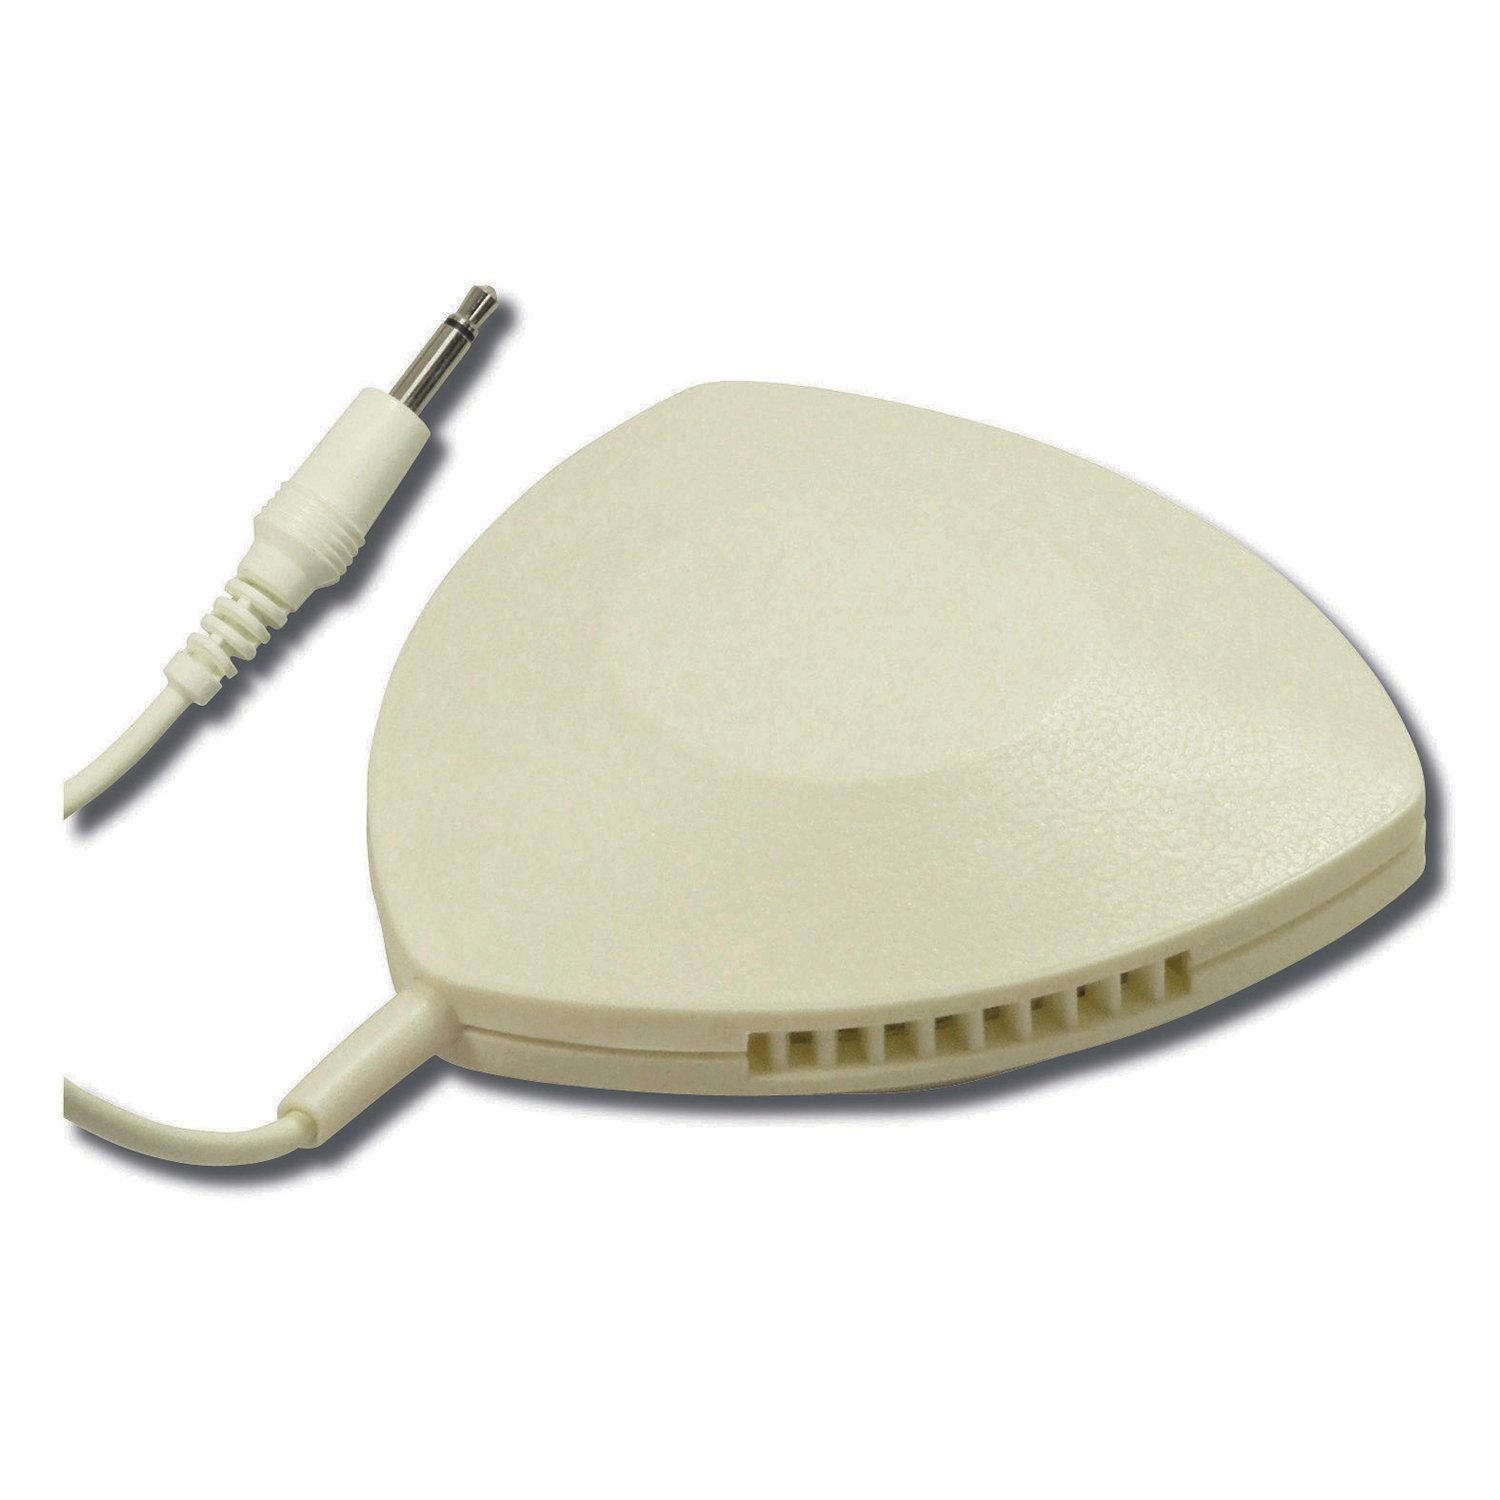 Soundlab Pillow Speaker with 3.5 Jack Plug Review